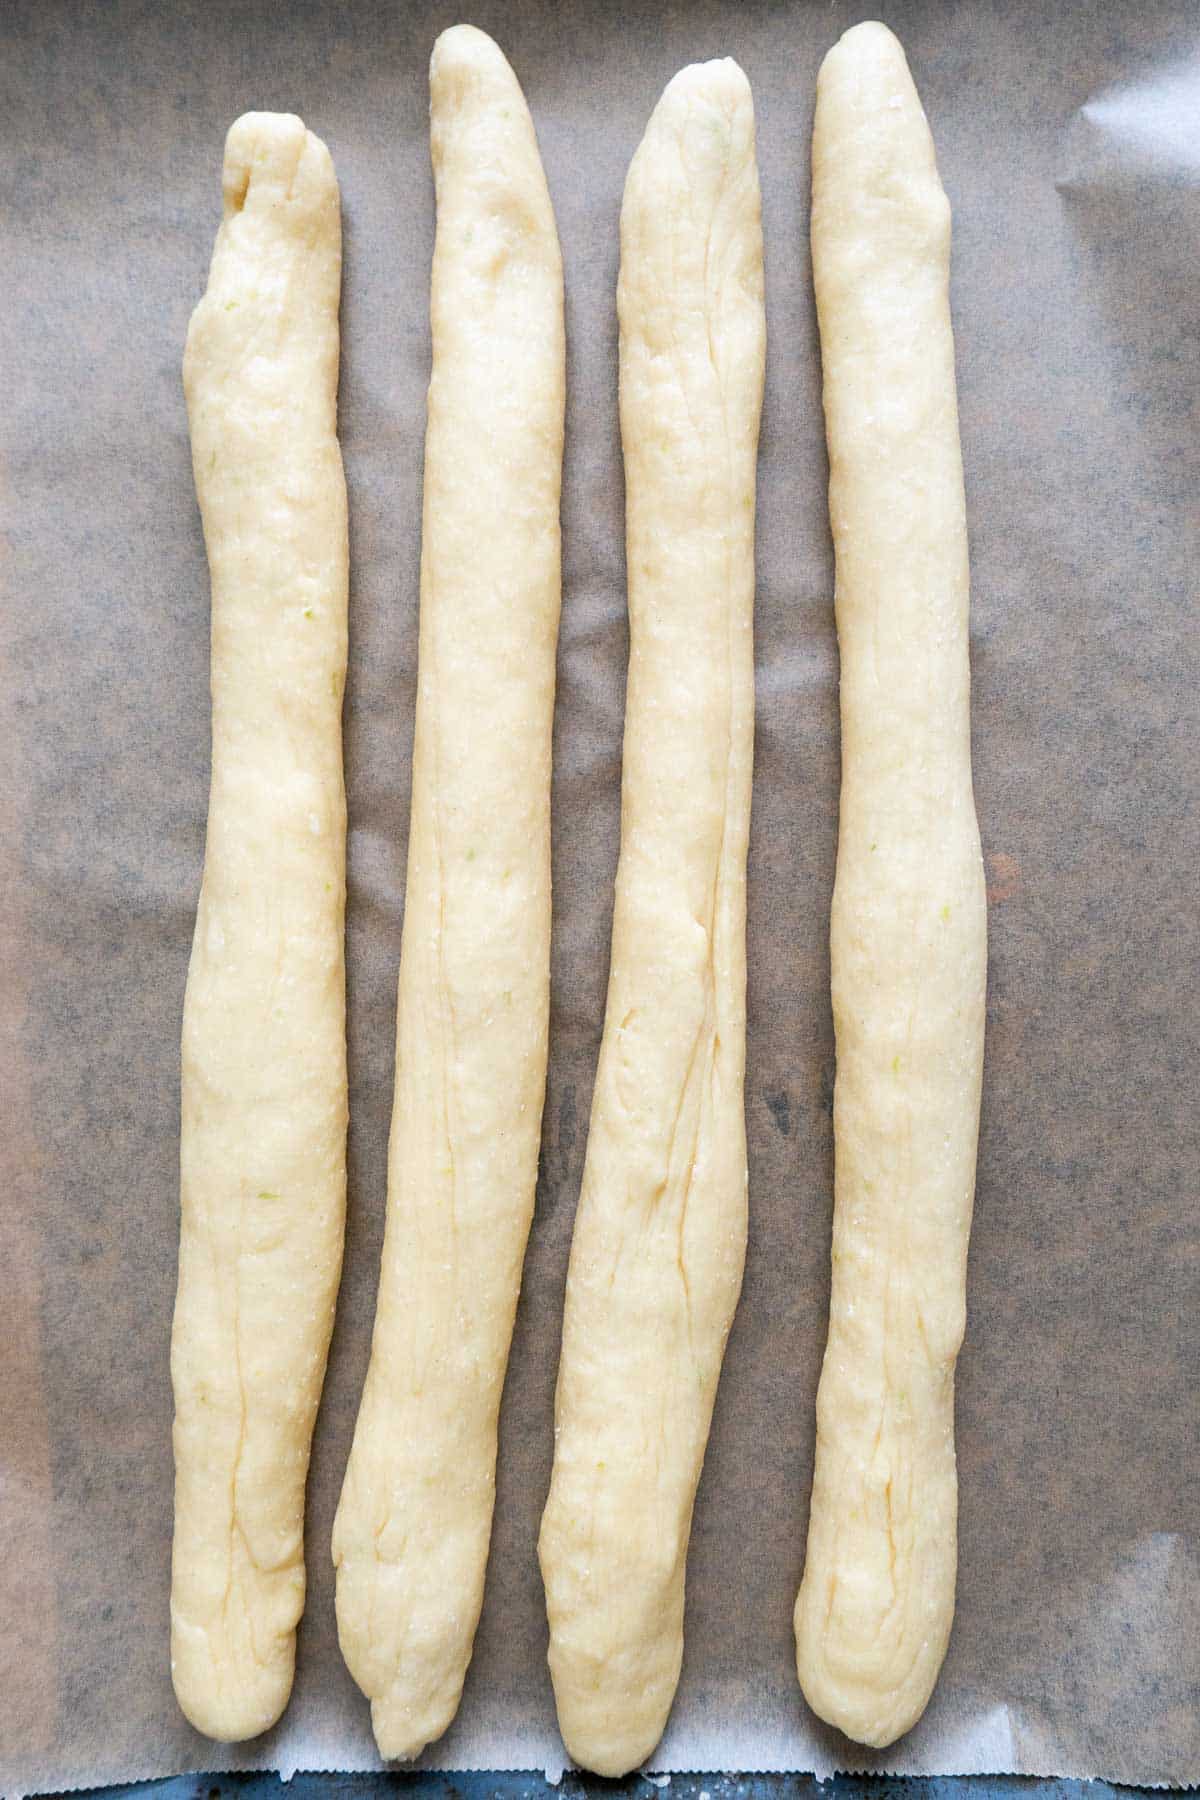 Four strands of dough on parchment.